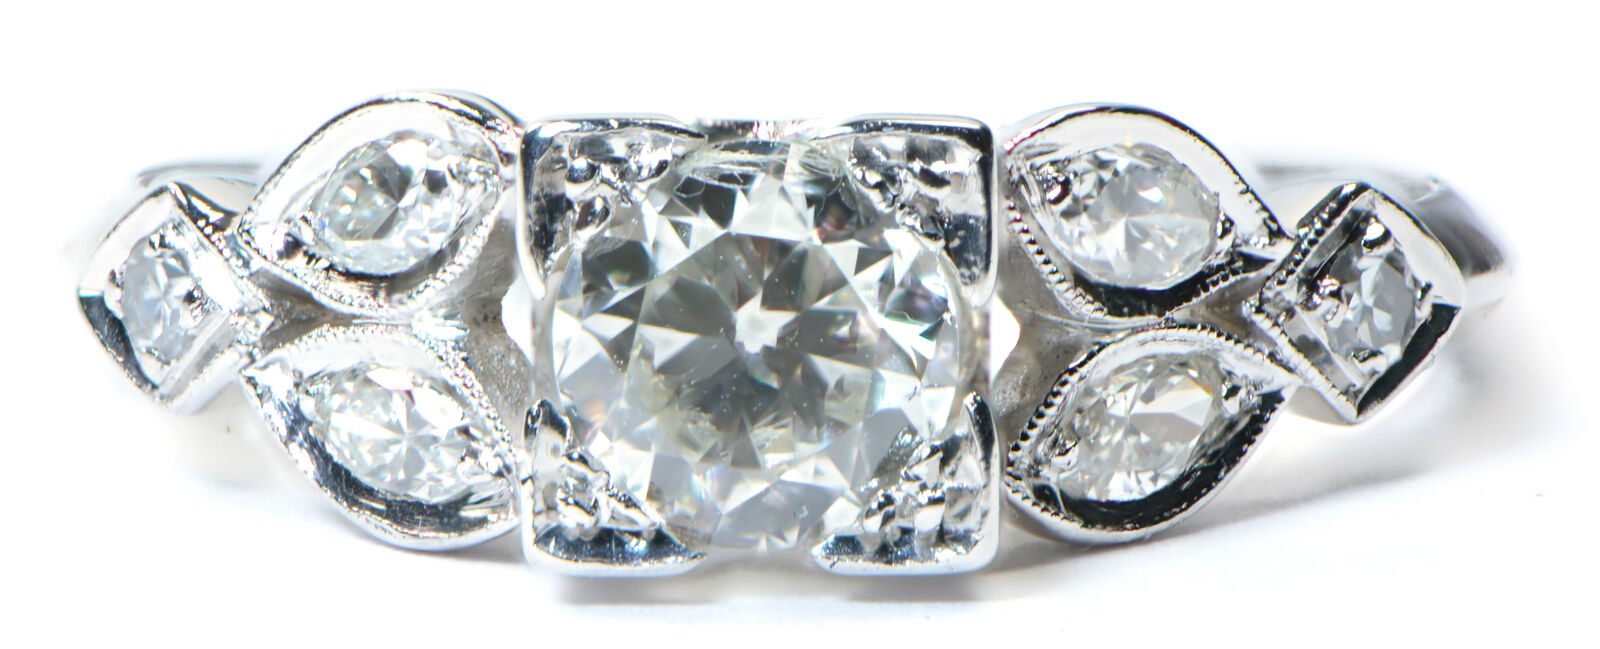 Antique-Diamond-Engagement-Ring-Platinum-8-ct-IJ-Color-VS1-Clarity-Size-7-131707237241